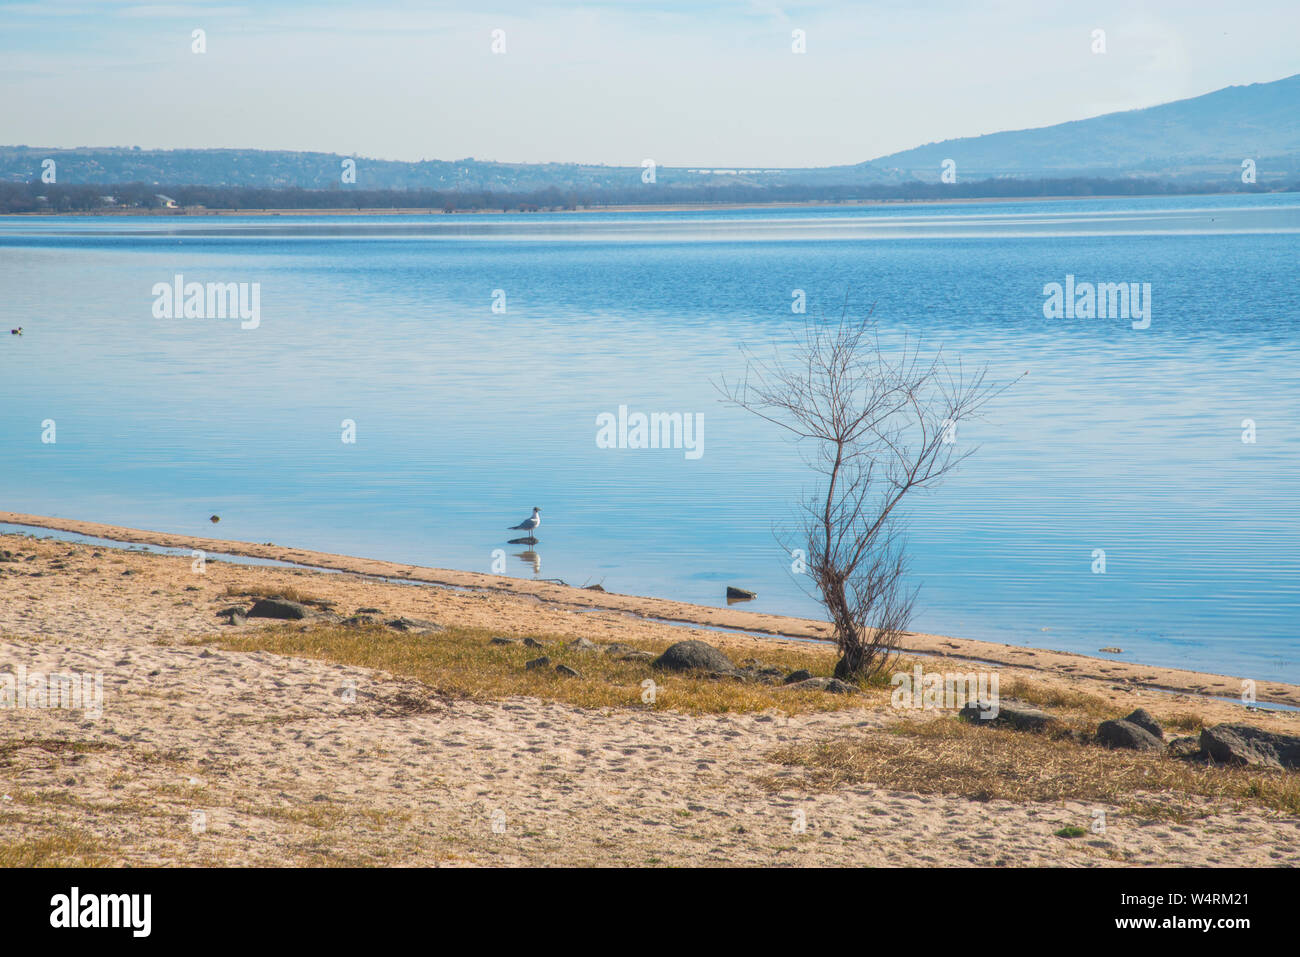 Santillana reservoir. Manzanares El Real, Madrid province, Spain. Stock Photo